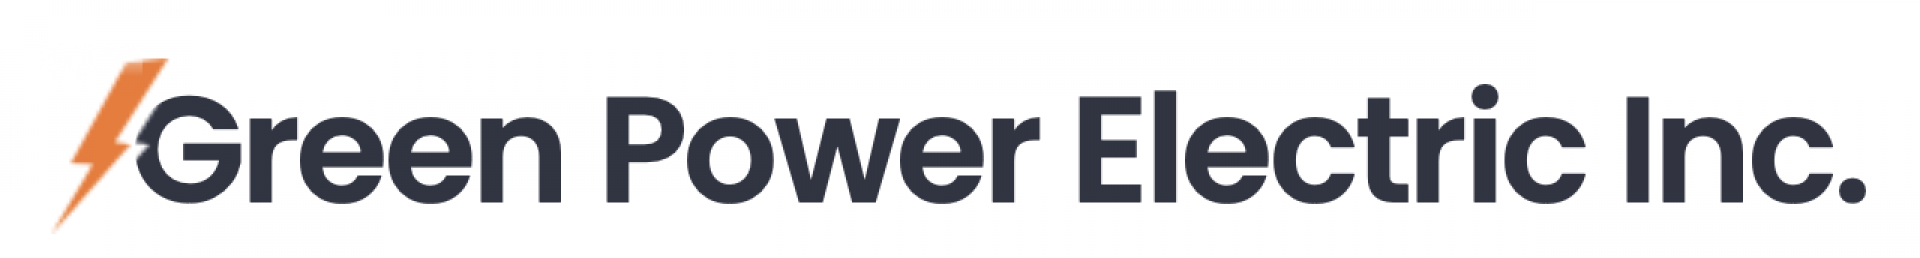 Green Power Electrical Inc	company logo